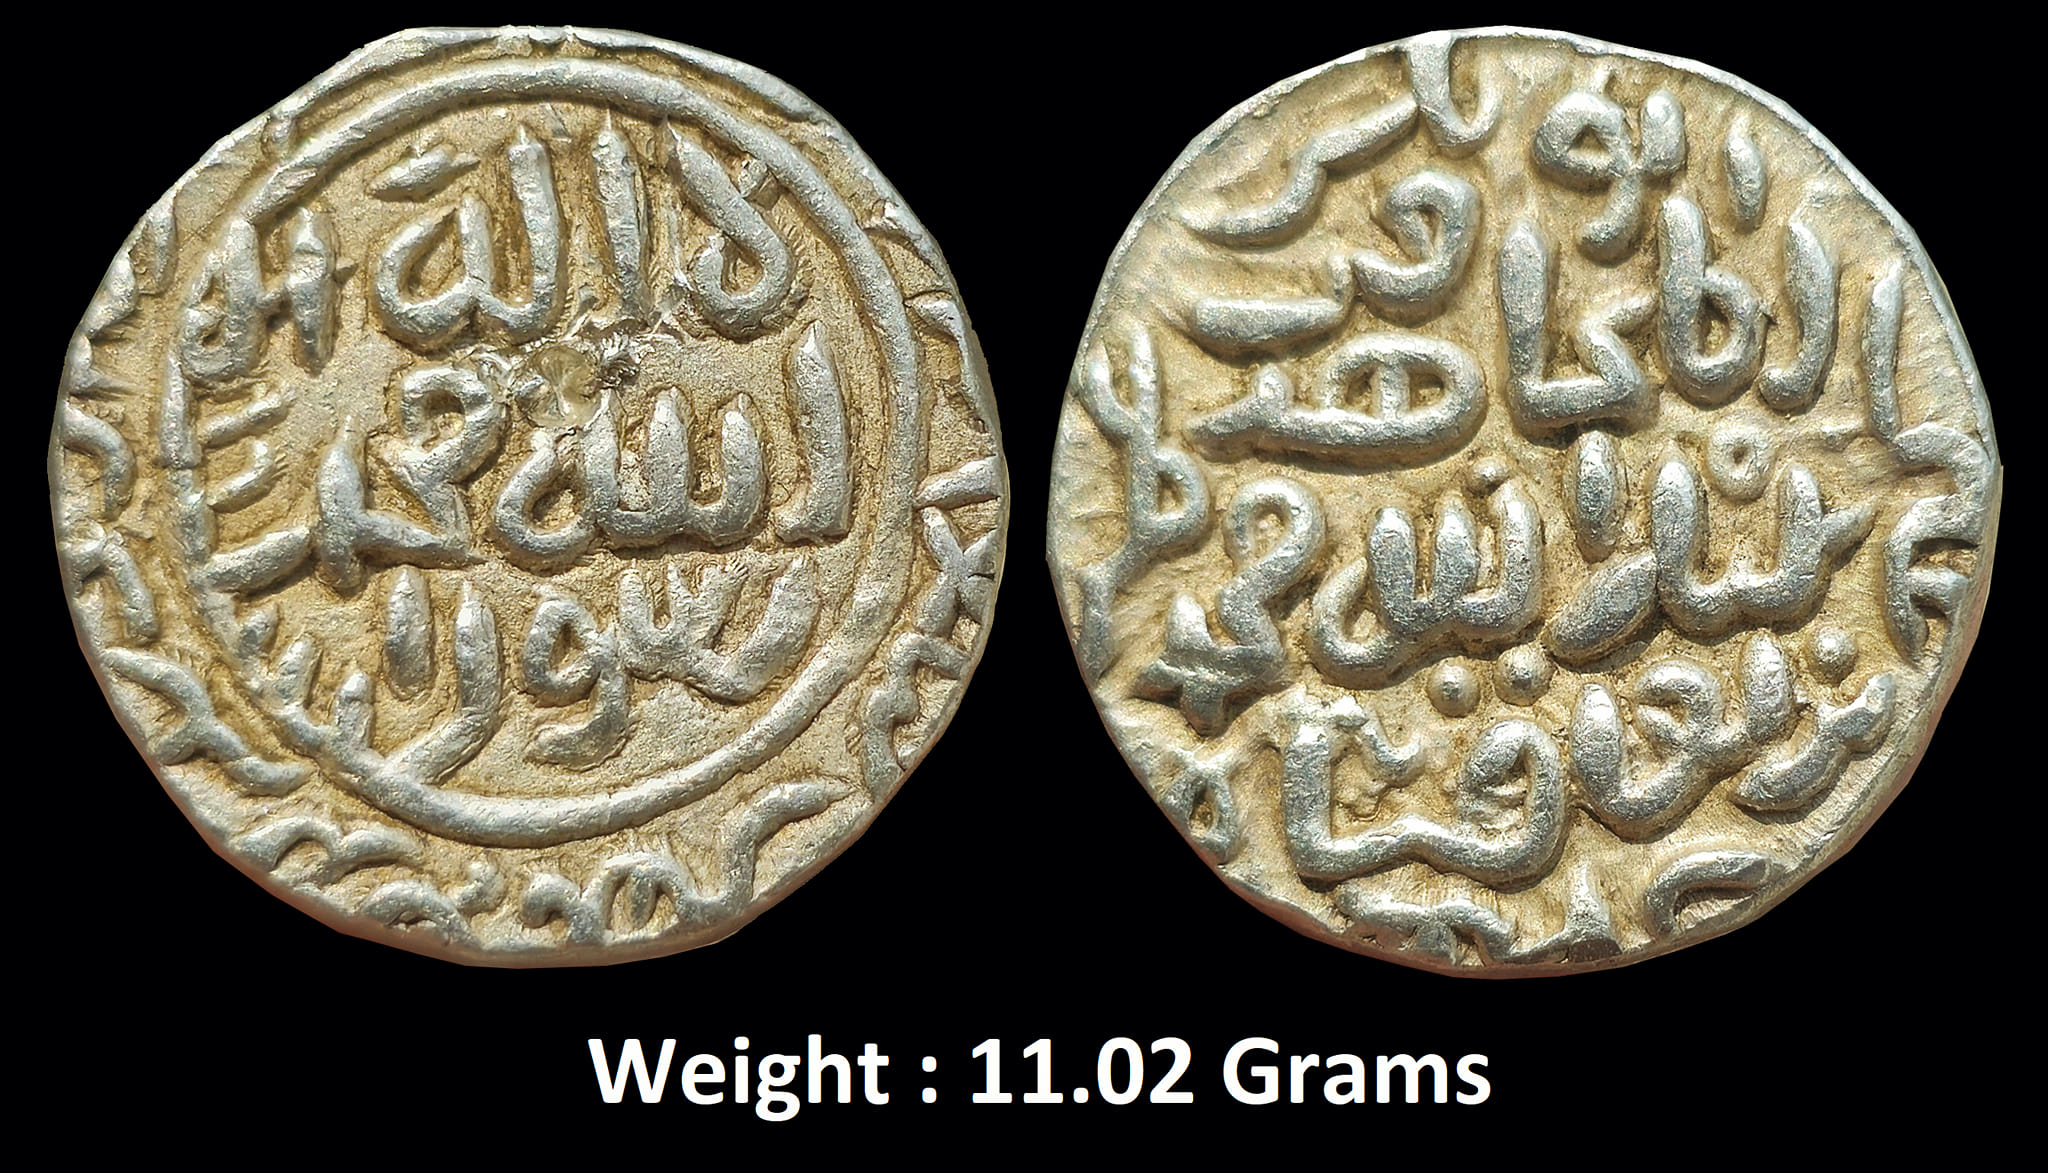 BENGAL SULTAN ; Muhammad bin Tughlaq Sultan of Delhi (AH 726-735; 1326-1335 AD), Silver Tanka, Shahr Lakhnauti Mint, al-mujahid fi sabil allah legend, (G&G B123).
Weight : 11.02 Grams